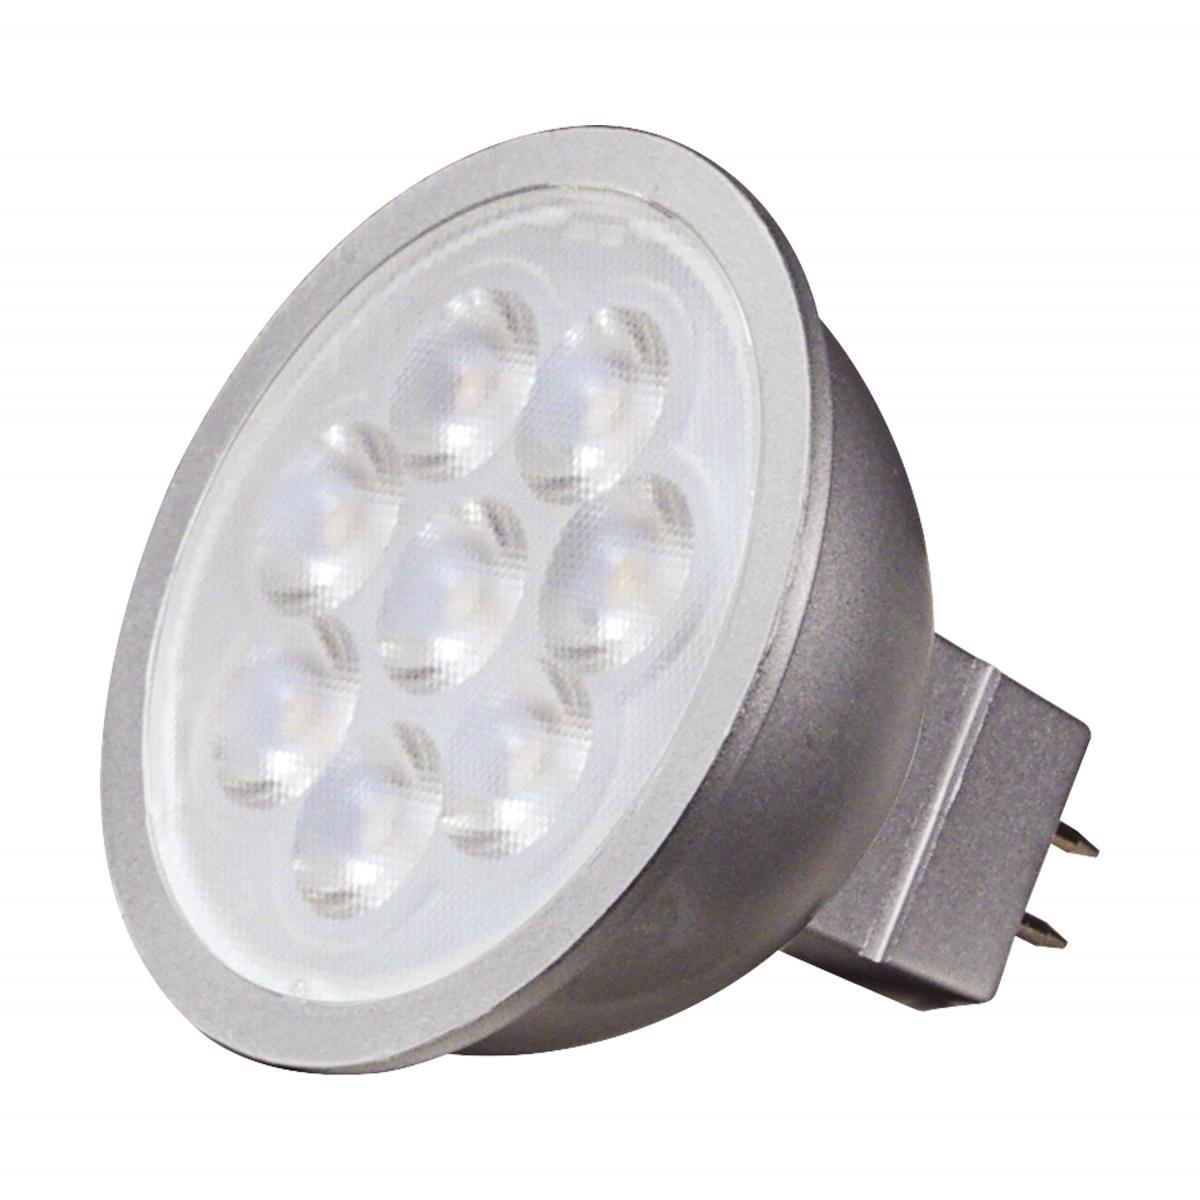 MR16 Reflector LED bulb, 6 watt, 450 Lumens, 3000K, GU5.3 Base, 25 Deg. Flood